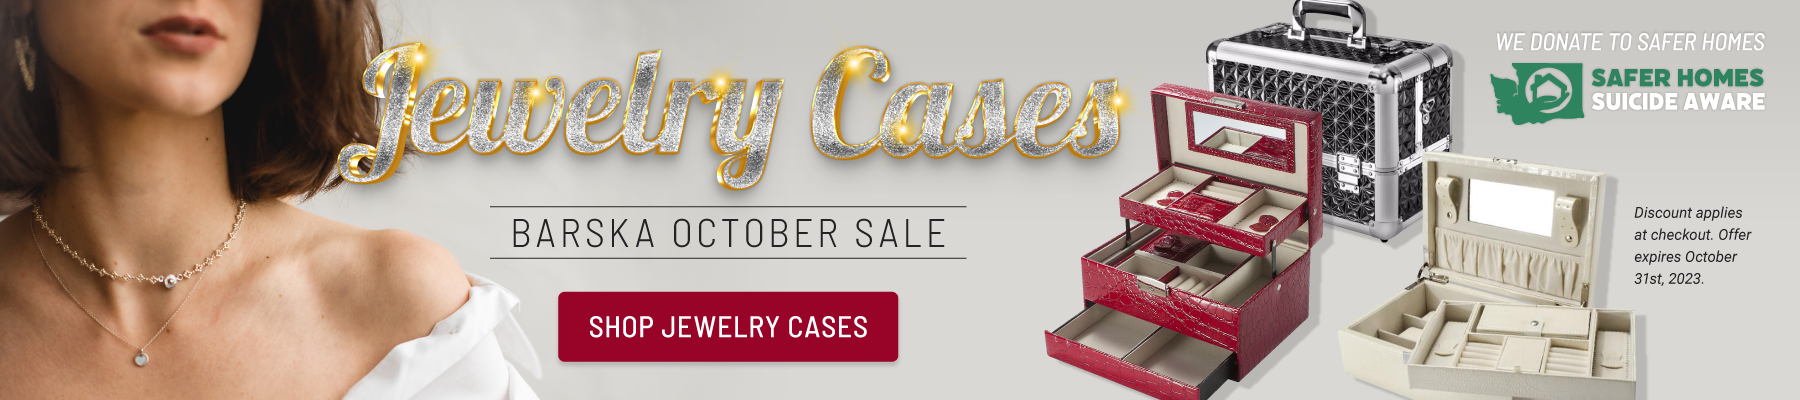 Barska Jewelry Cases October Sale